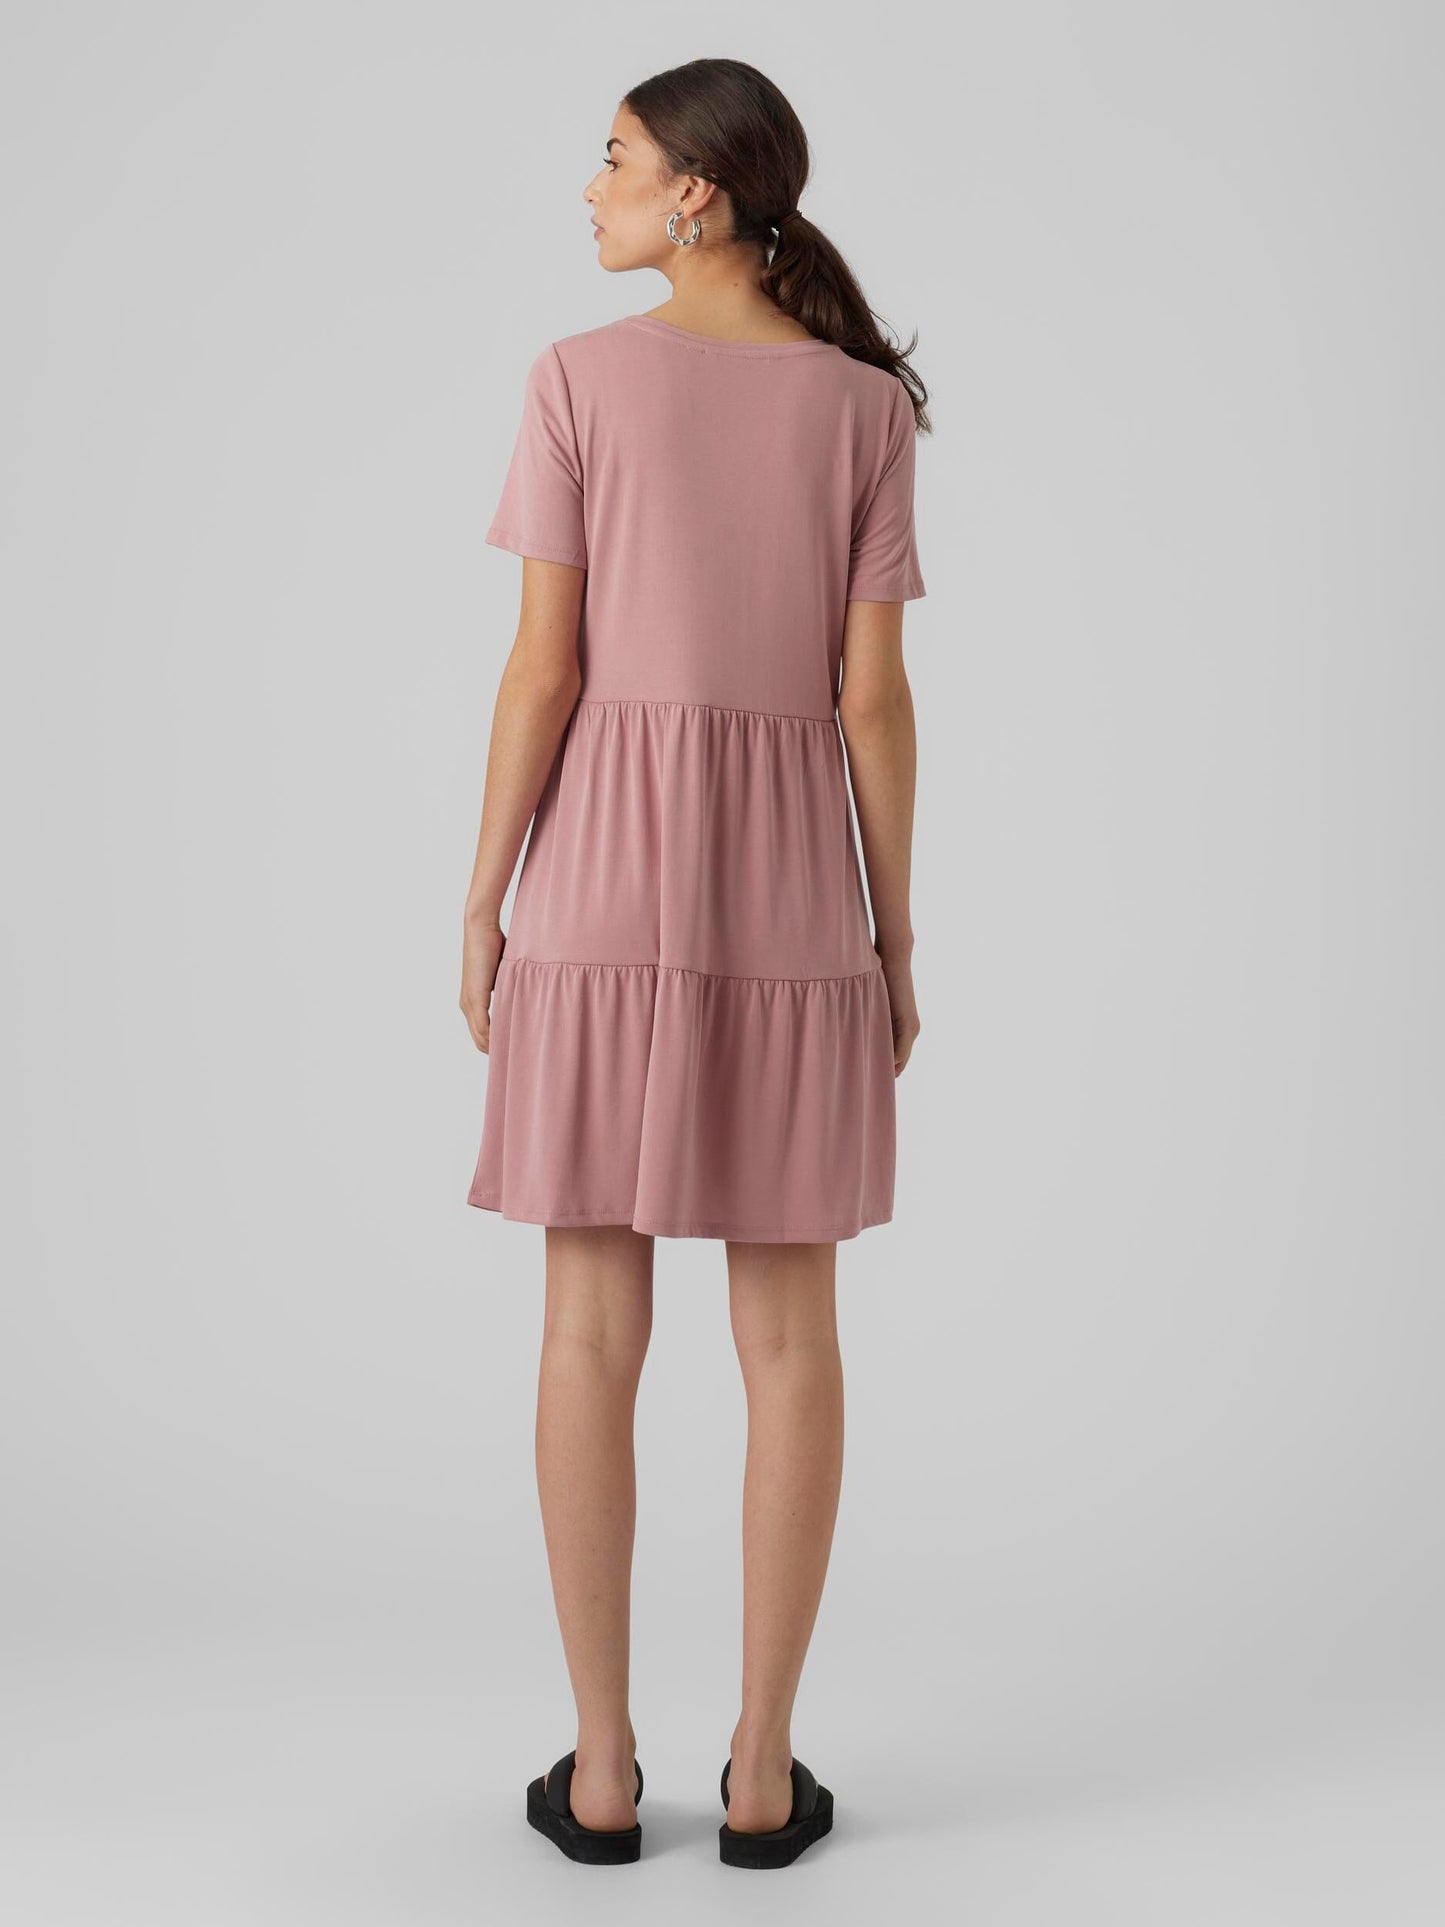 Filli Dress | Nostalgia Rose Dresses Vero Moda 